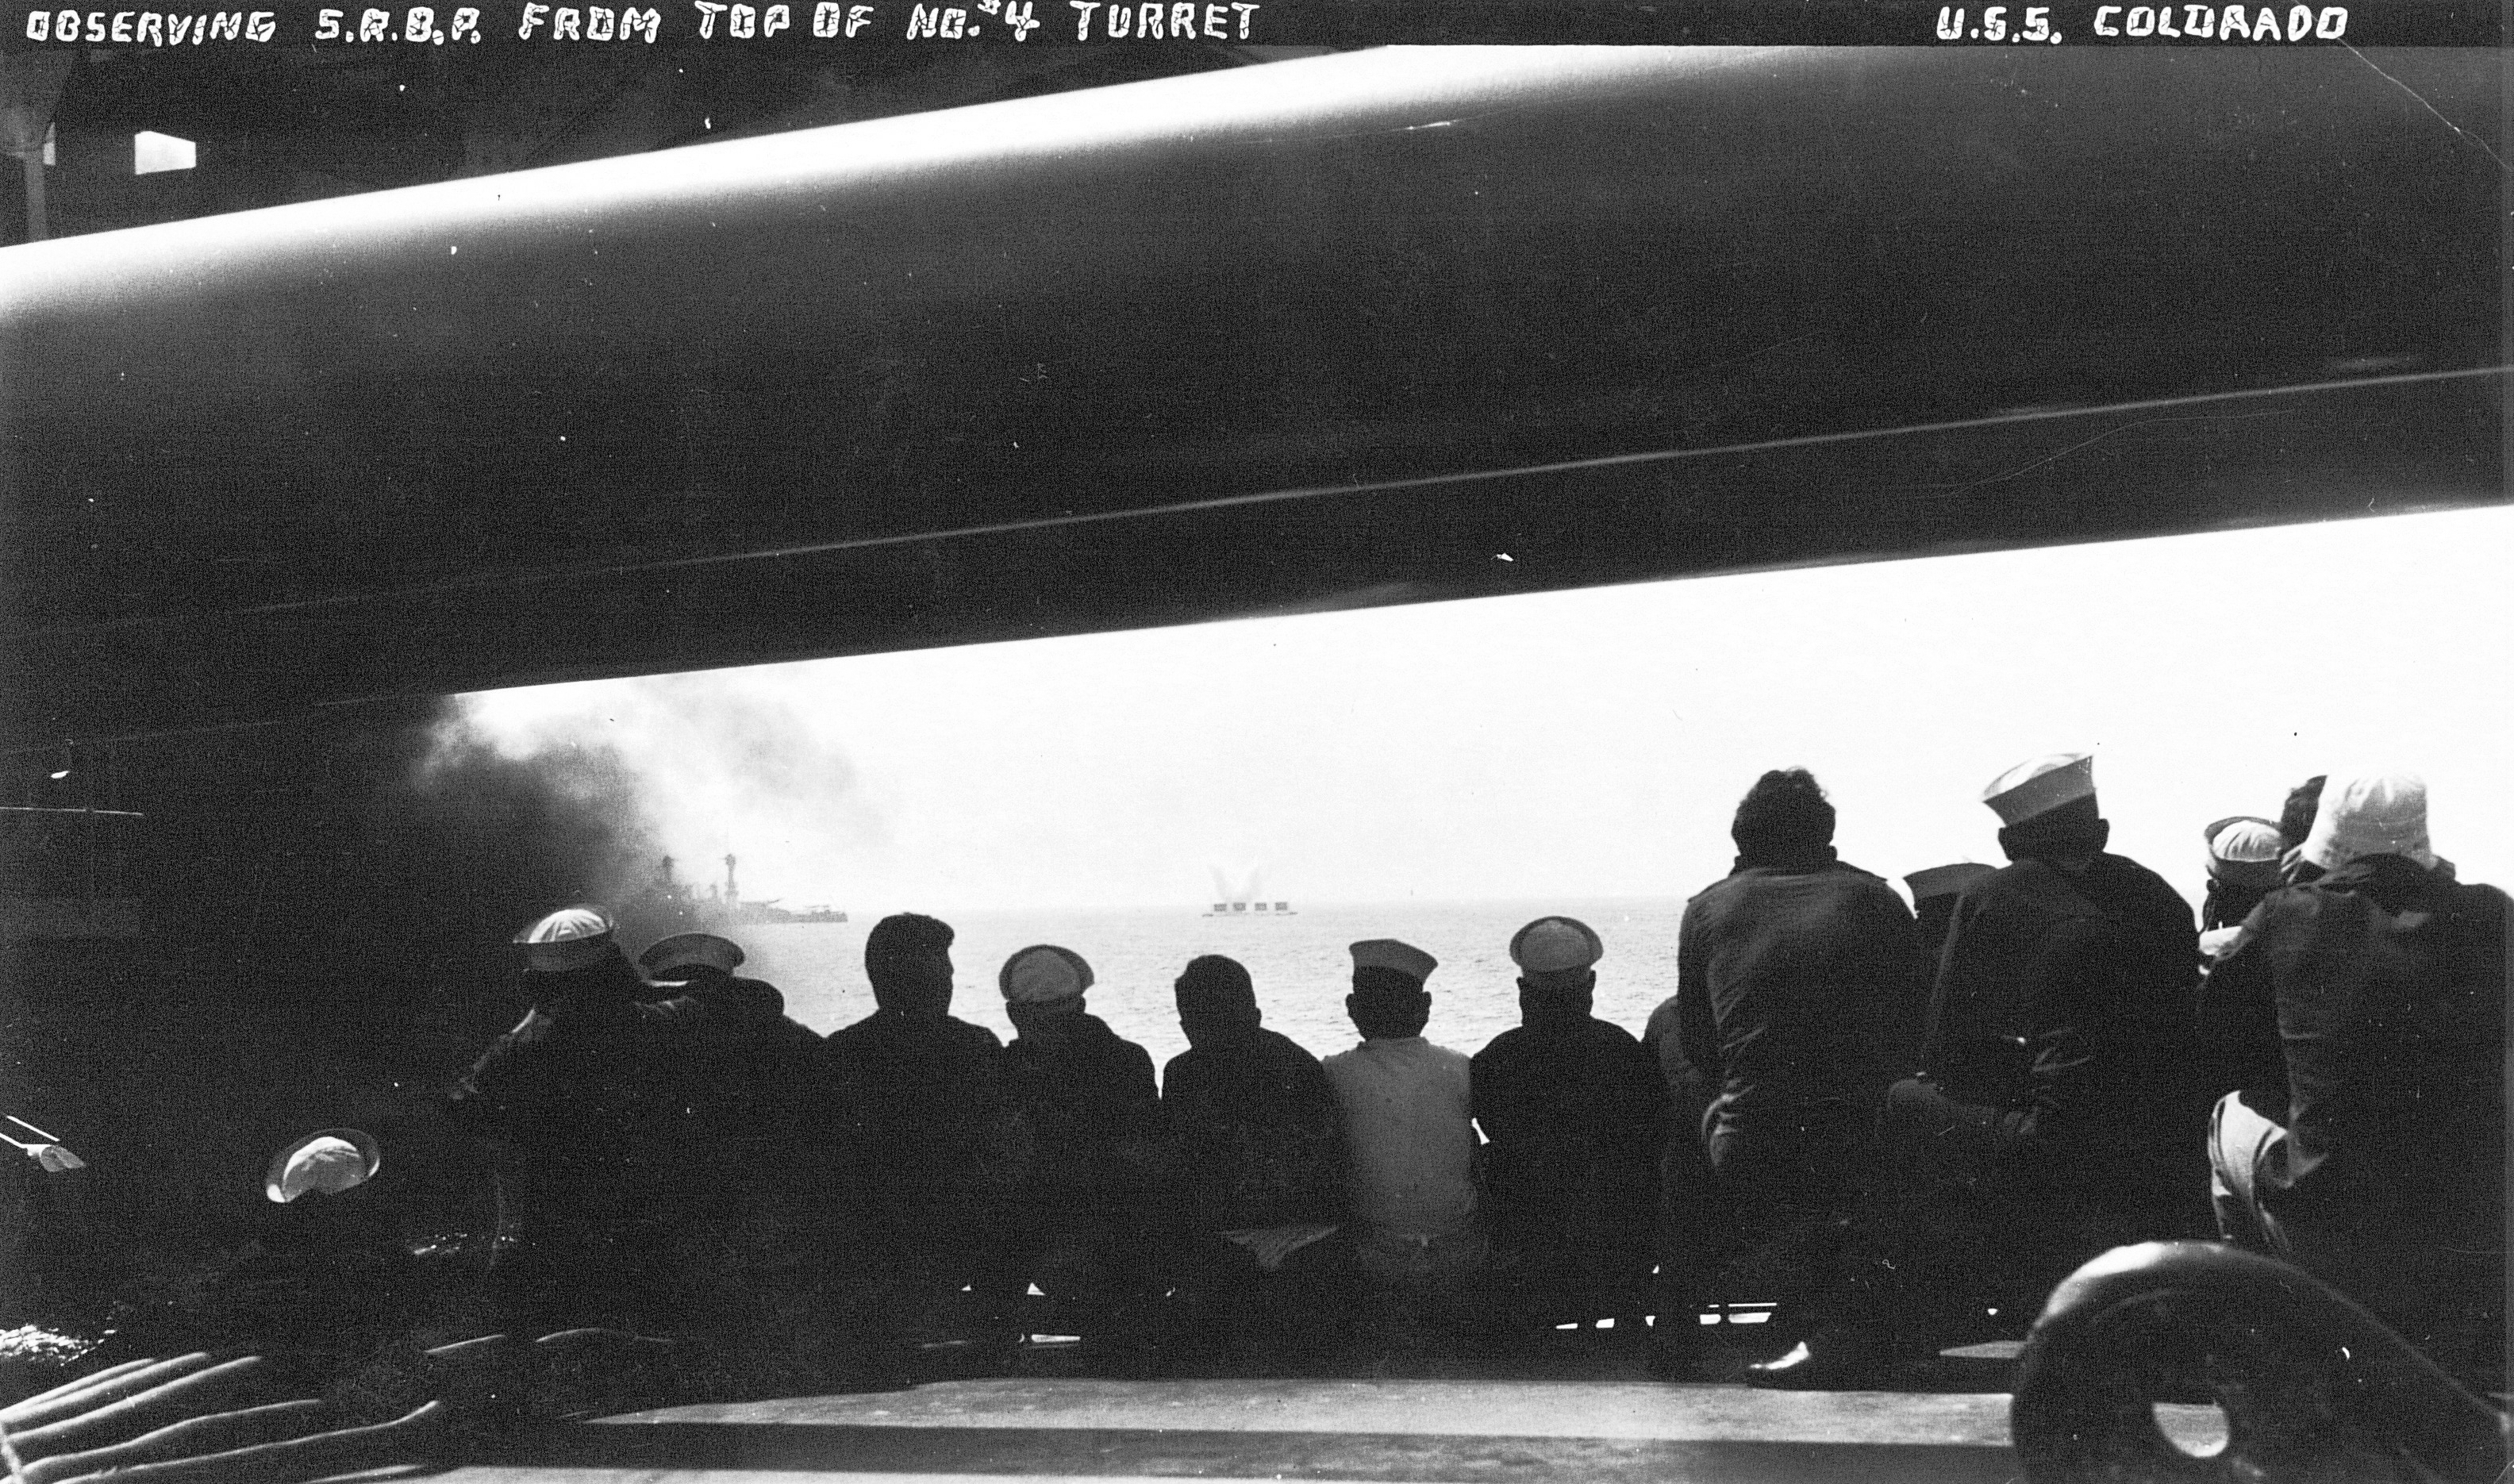 Crew of USS Colorado observing short range battle practice atop Turret No. 4, mid-1920s